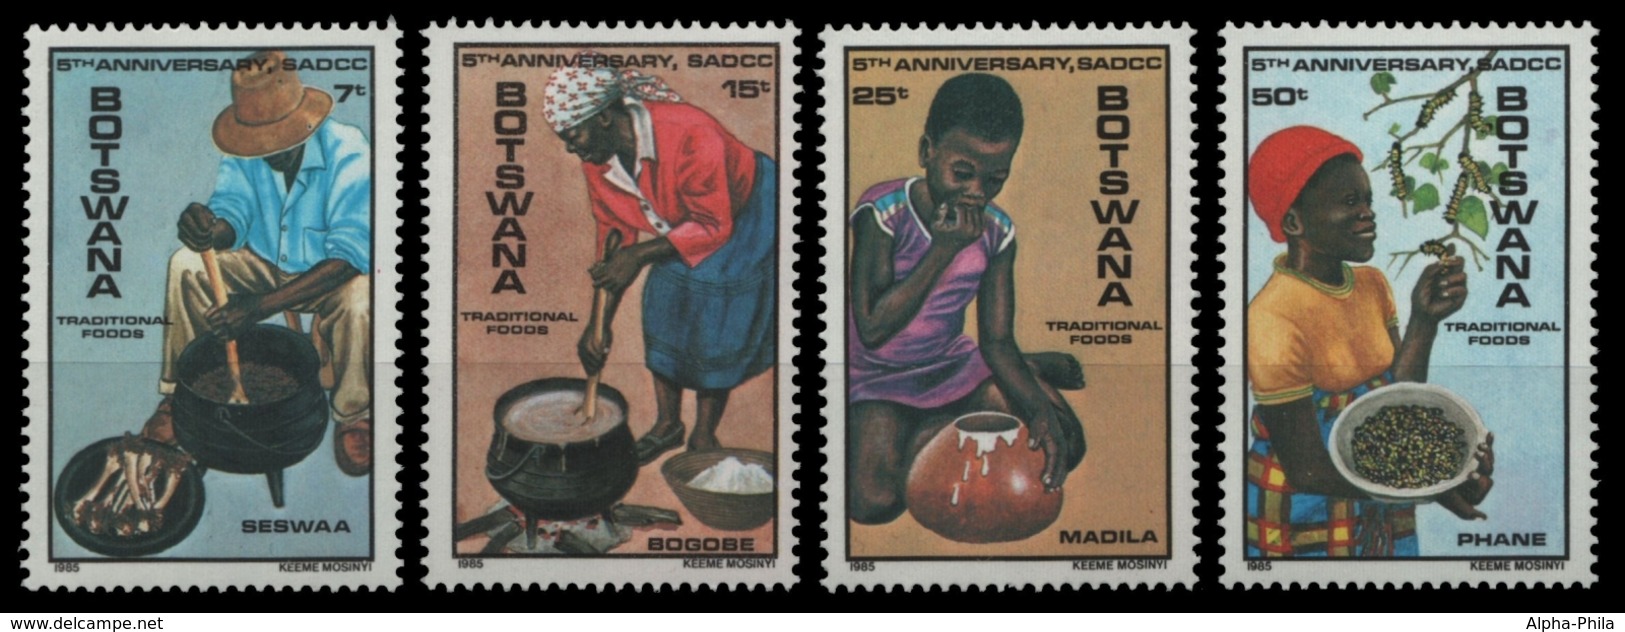 Botswana 1985 - Mi-Nr. 355-358 ** - MNH - Traditionelle Lebensmittel - Botswana (1966-...)